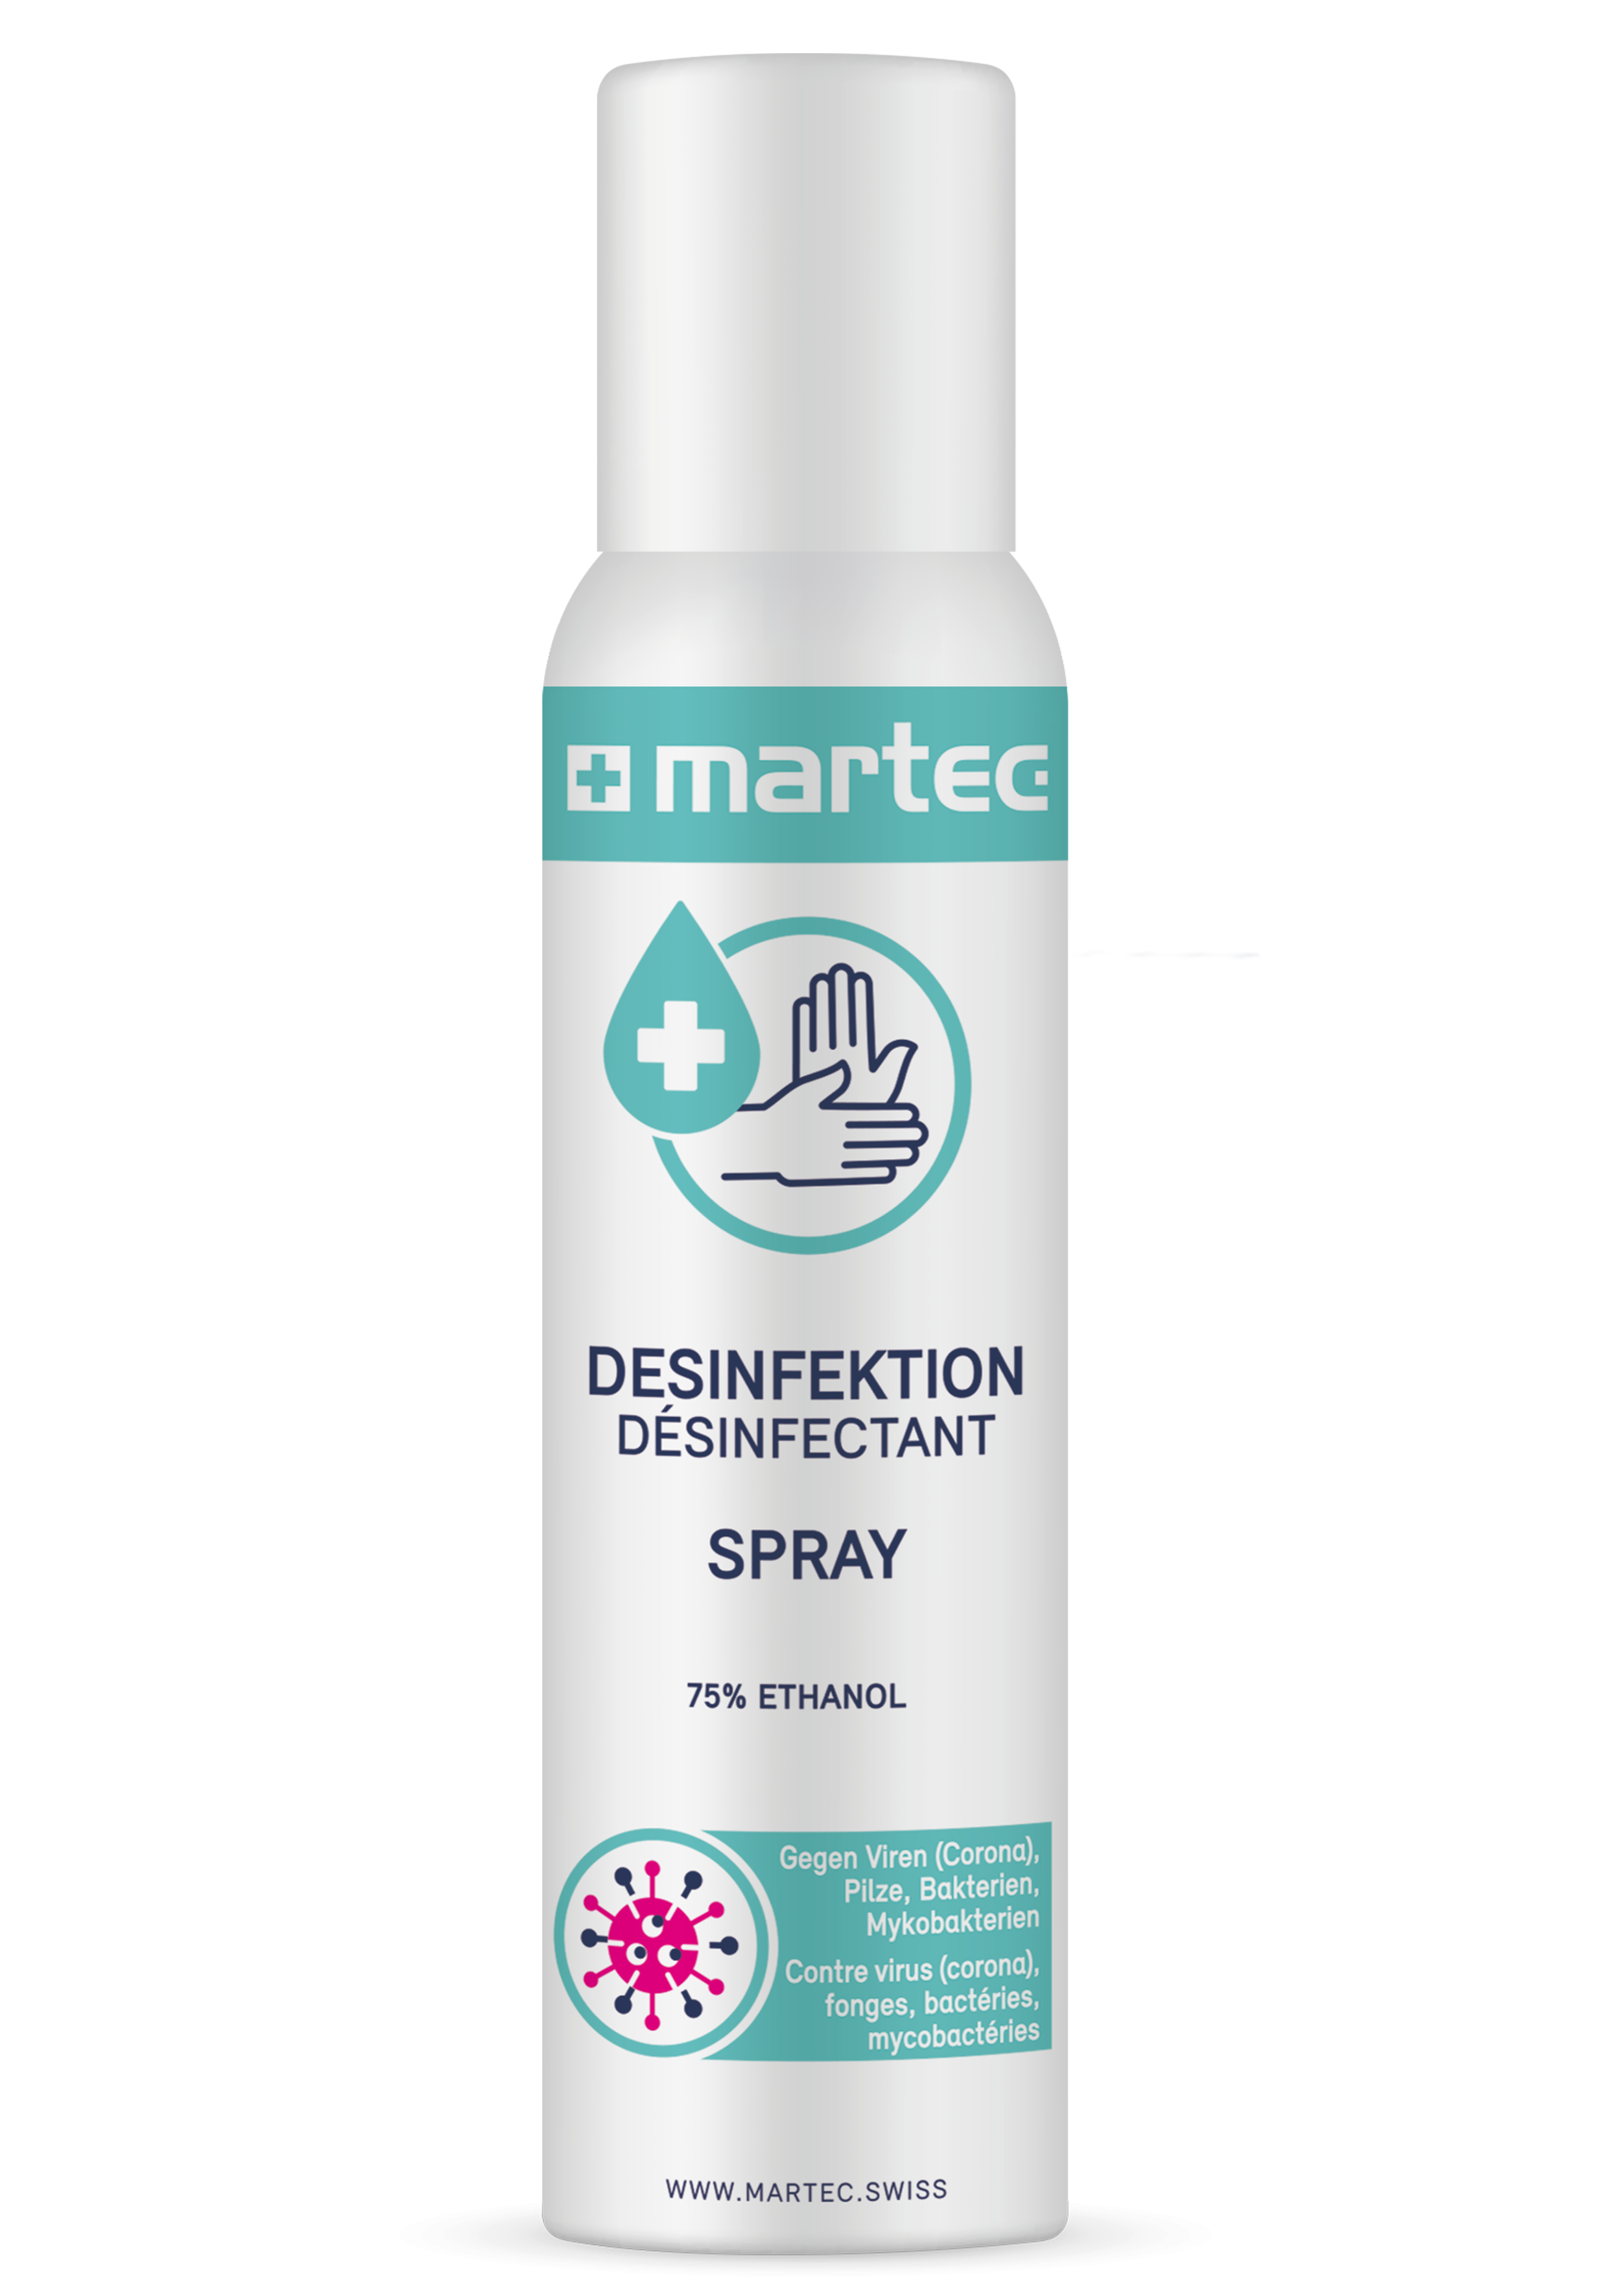 martec-handels-ag_martec-medical_martec-haende-desinfektion-spray